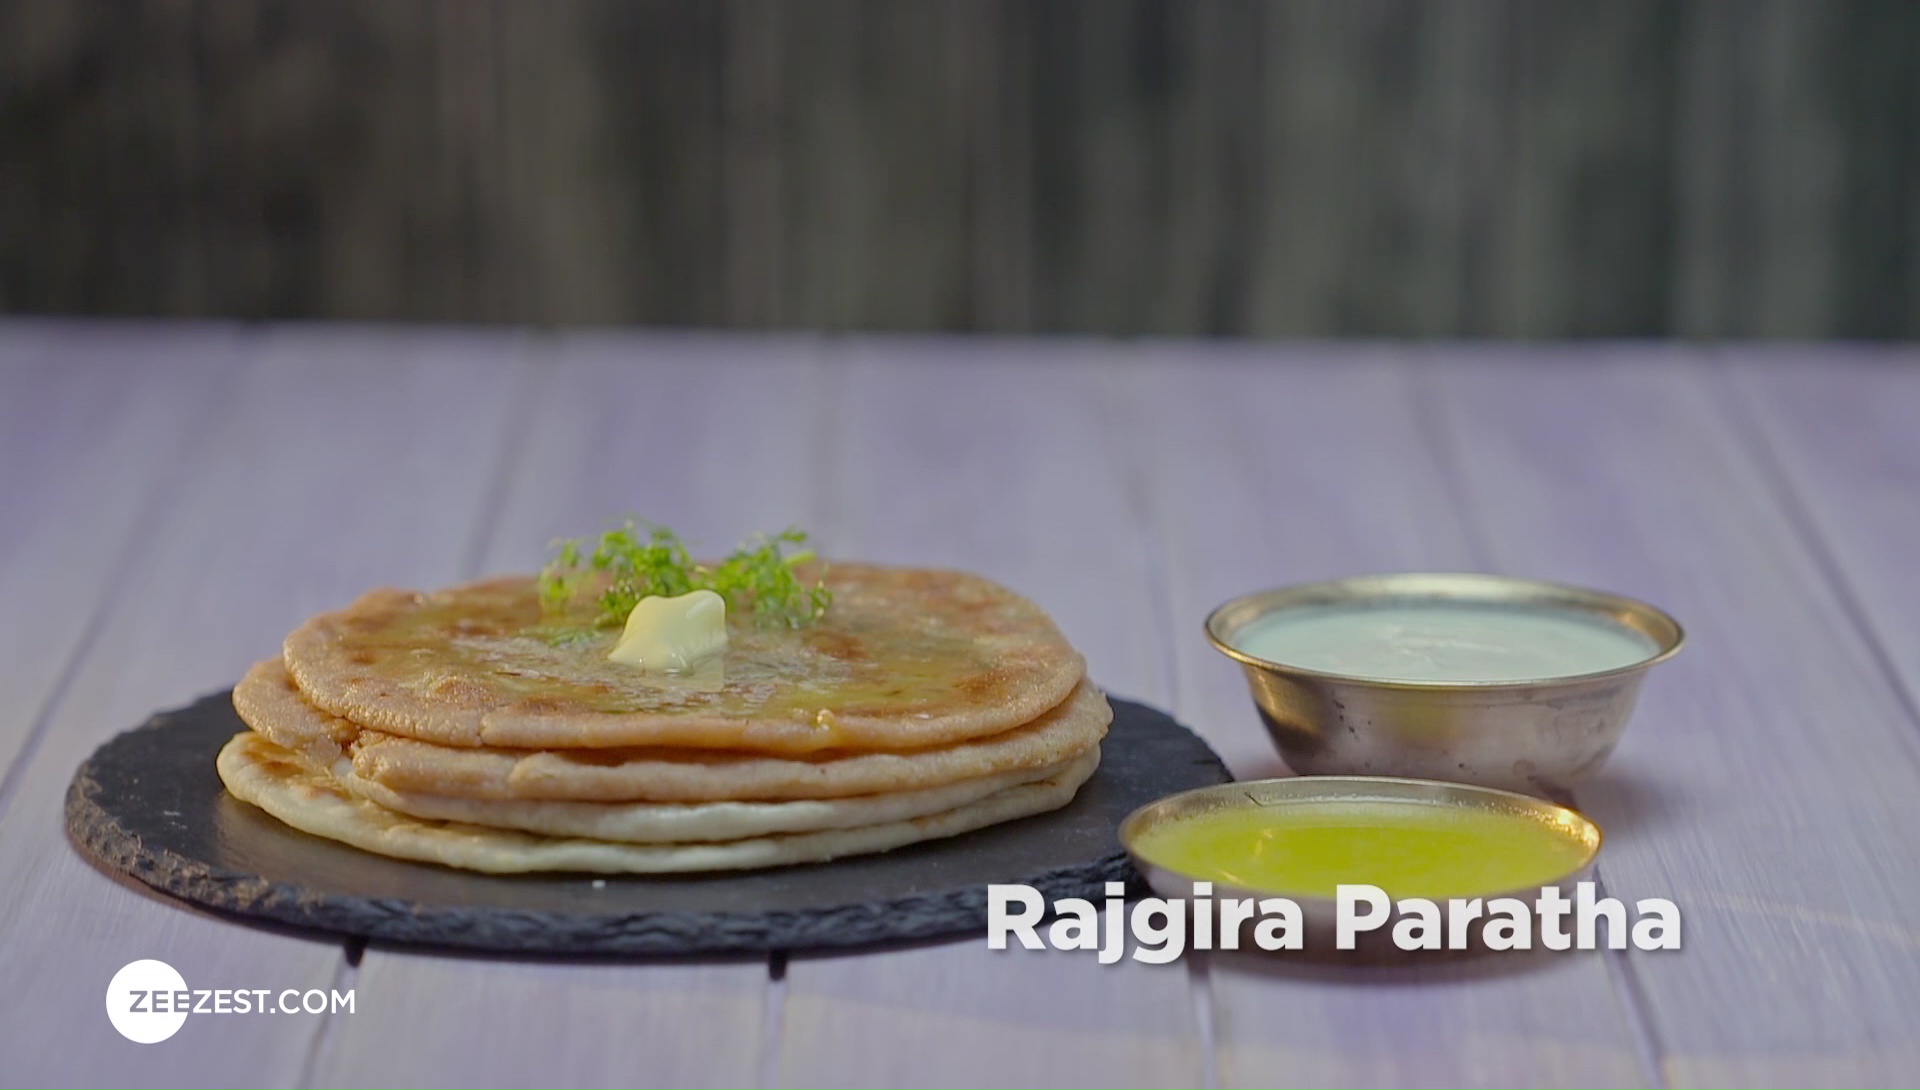 Rajgira Paratha